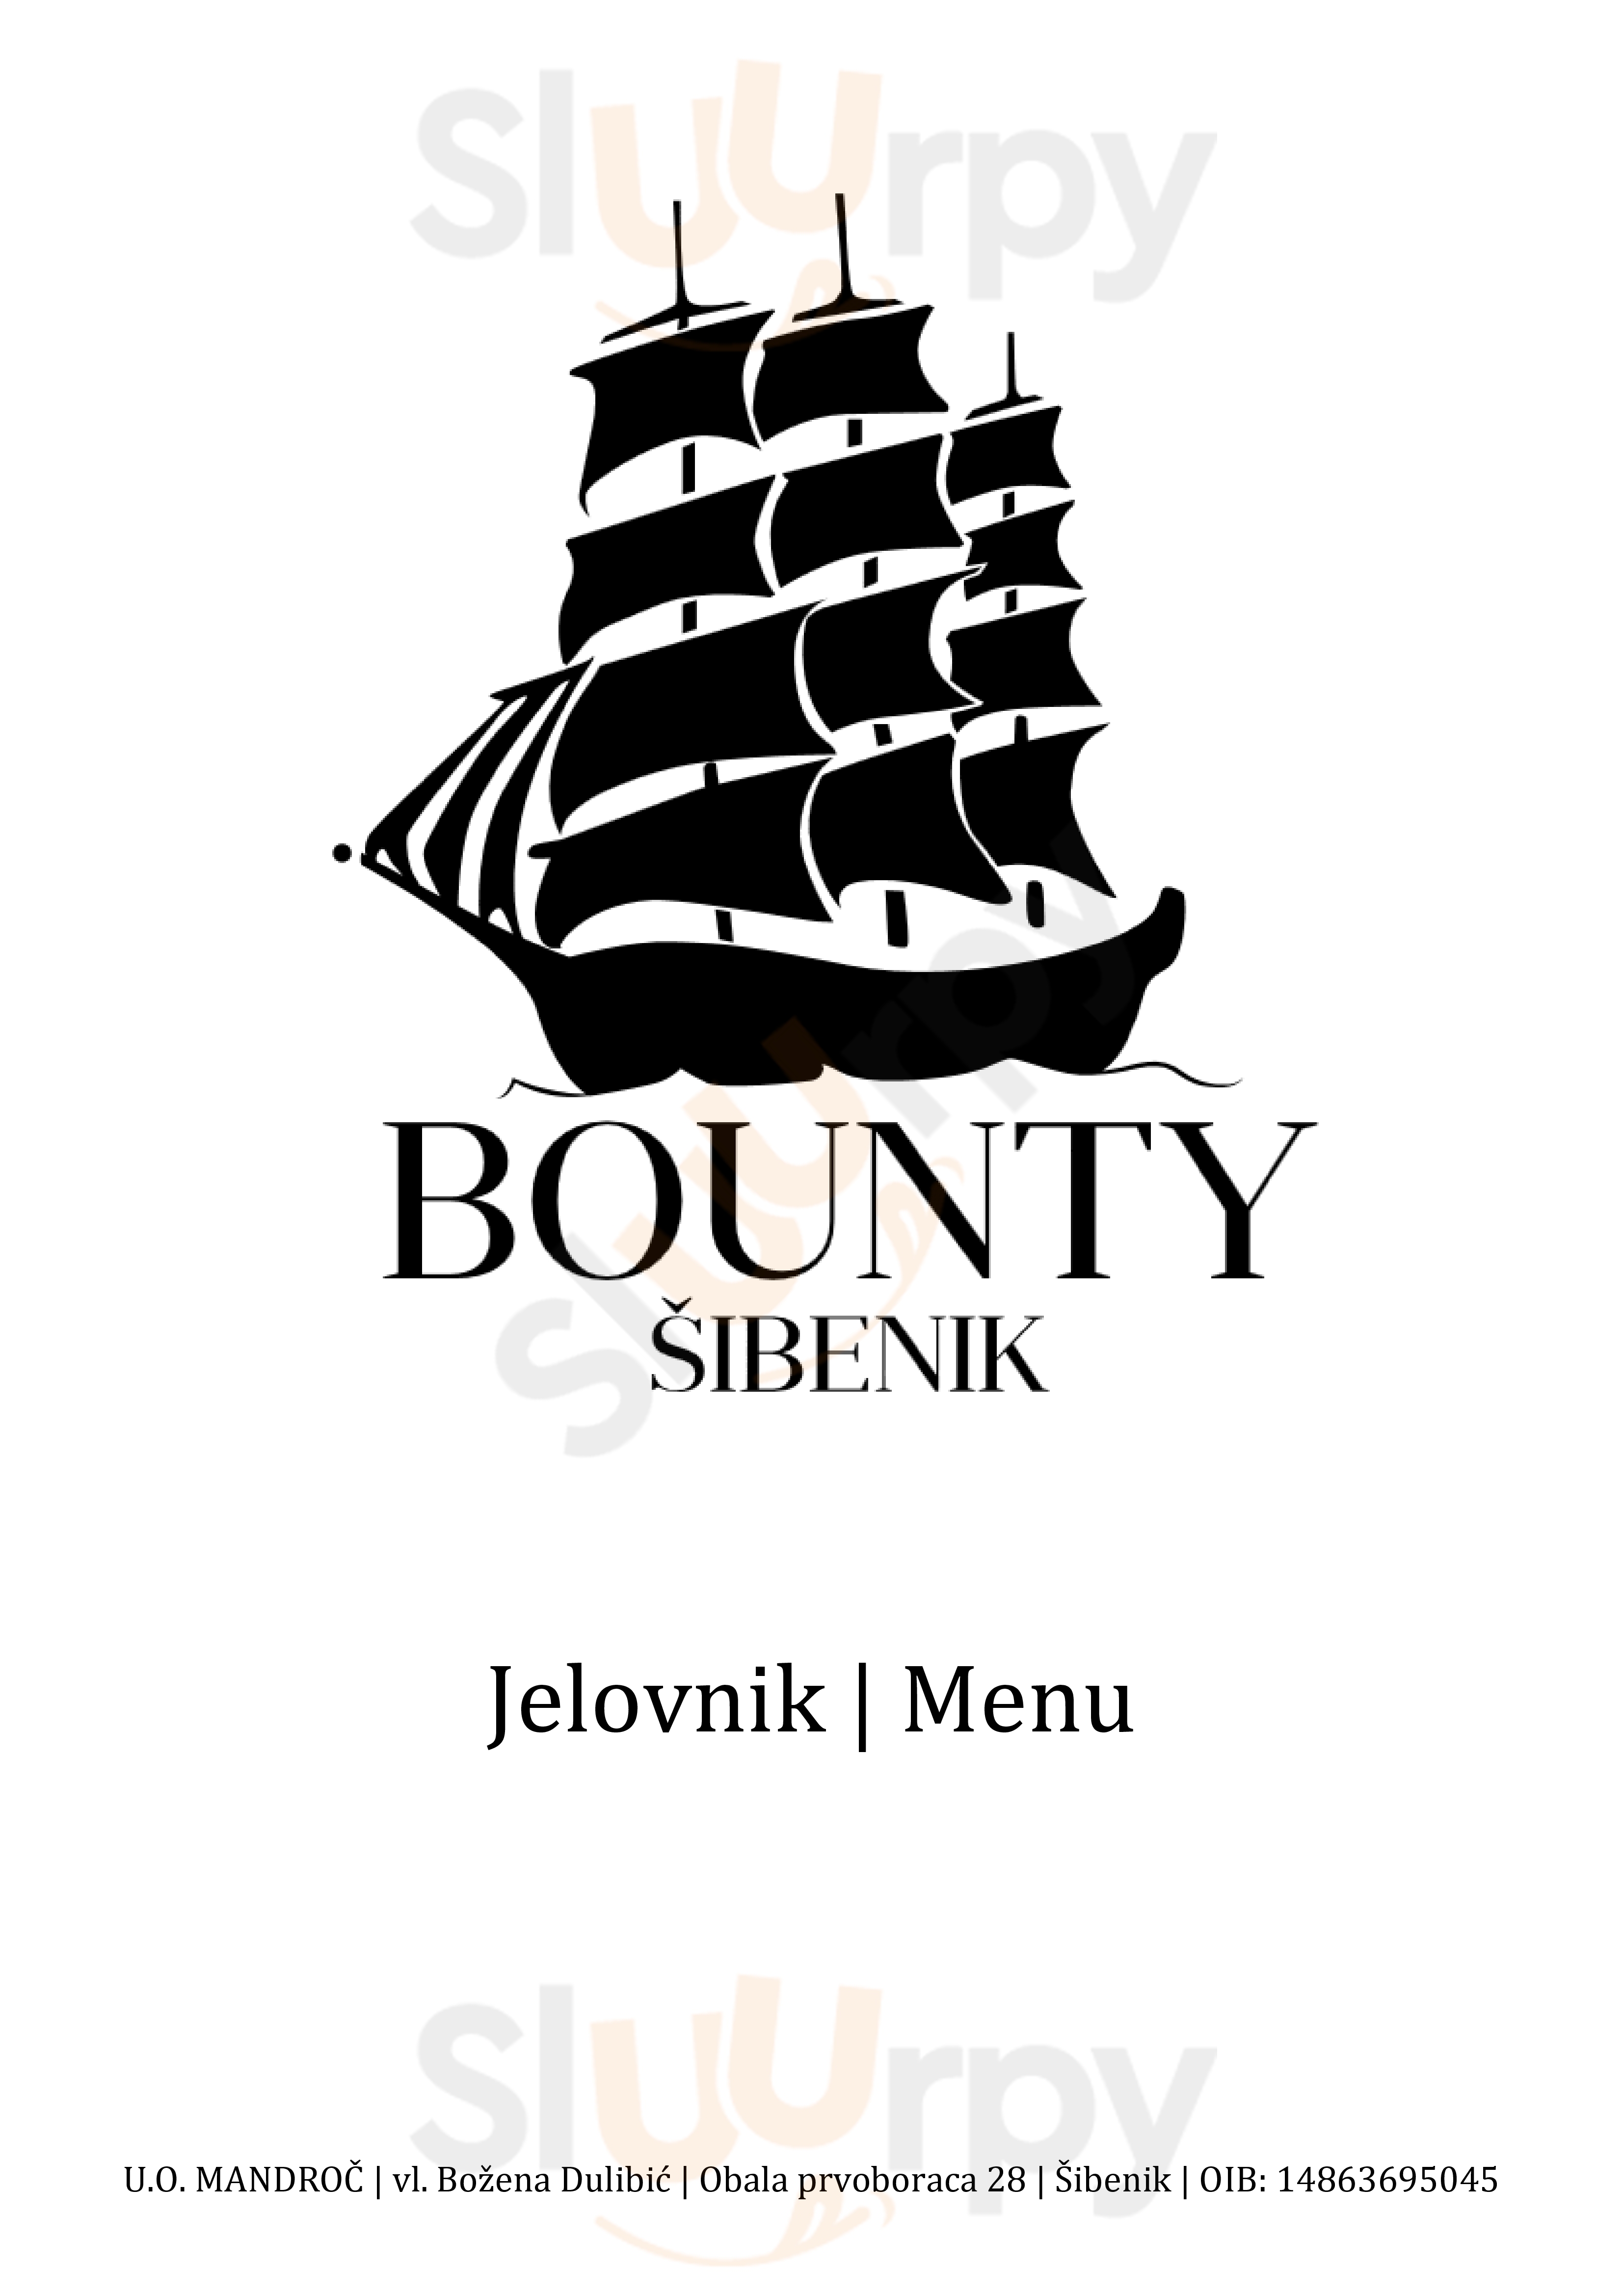 Bounty Sibenik Menu - 1